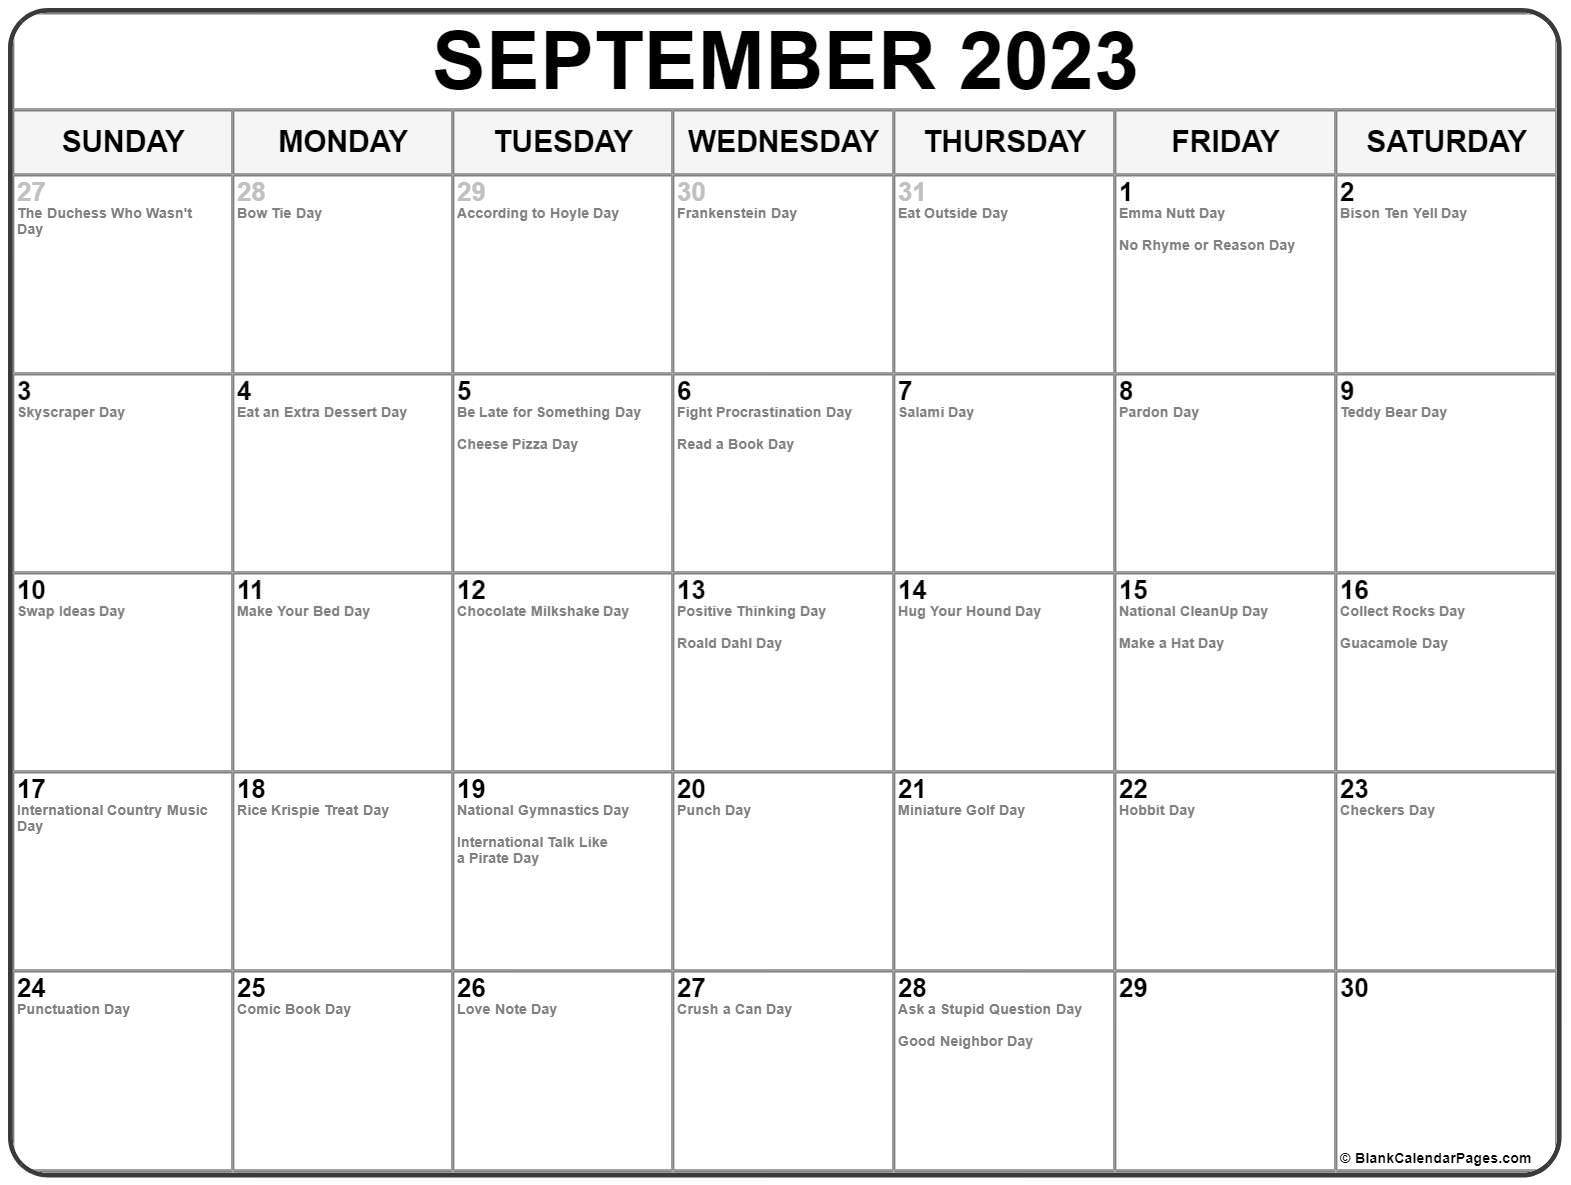 September 2023 Holidays And Observances PELAJARAN